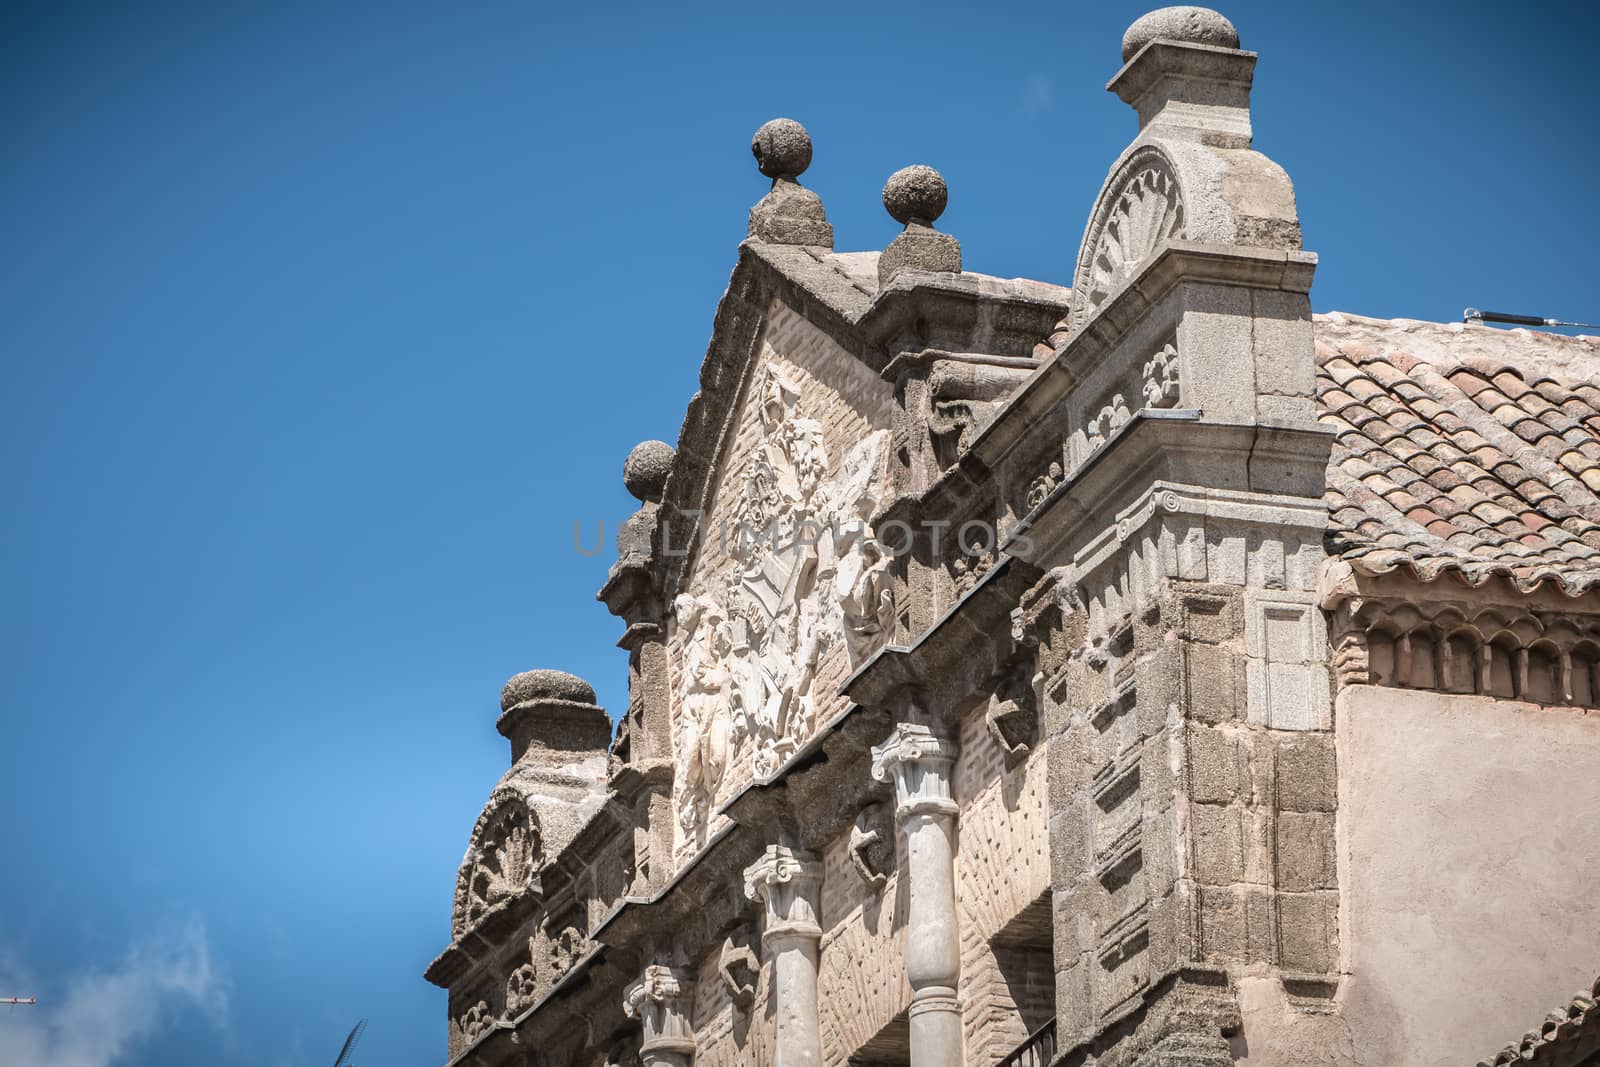 Architectural detail of the museum Santa Cruz de Toledo by AtlanticEUROSTOXX